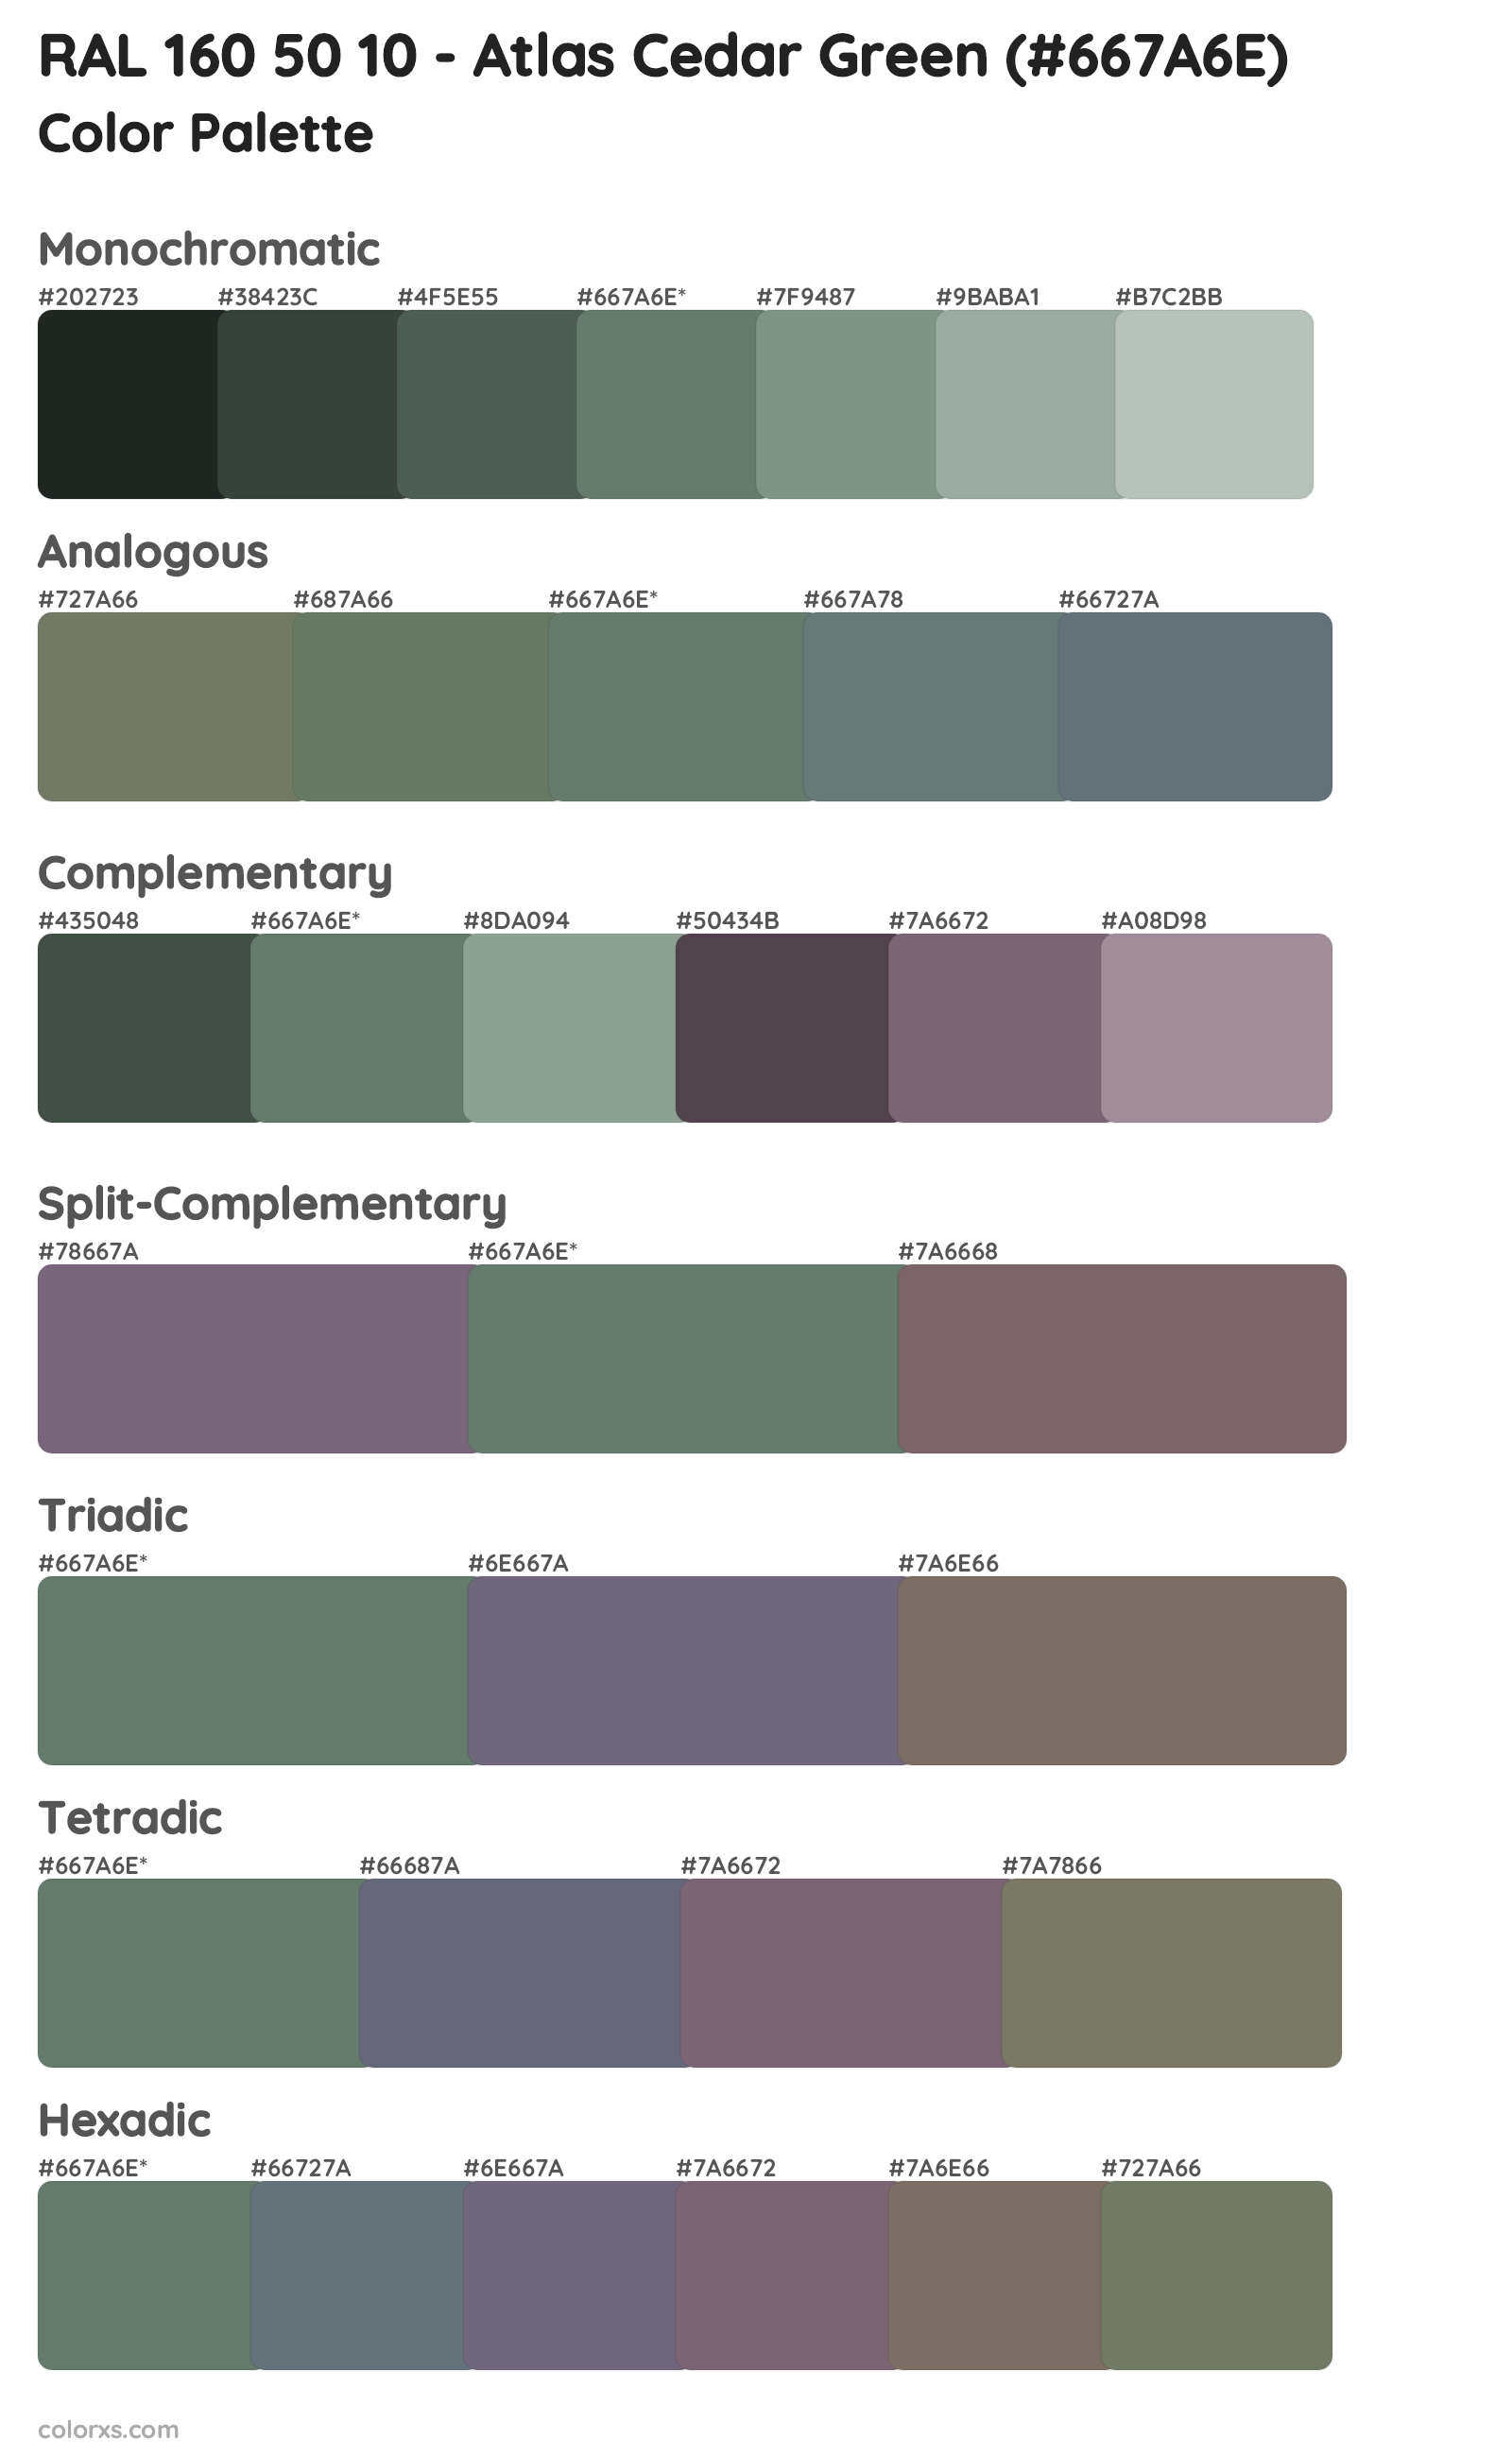 RAL 160 50 10 - Atlas Cedar Green Color Scheme Palettes